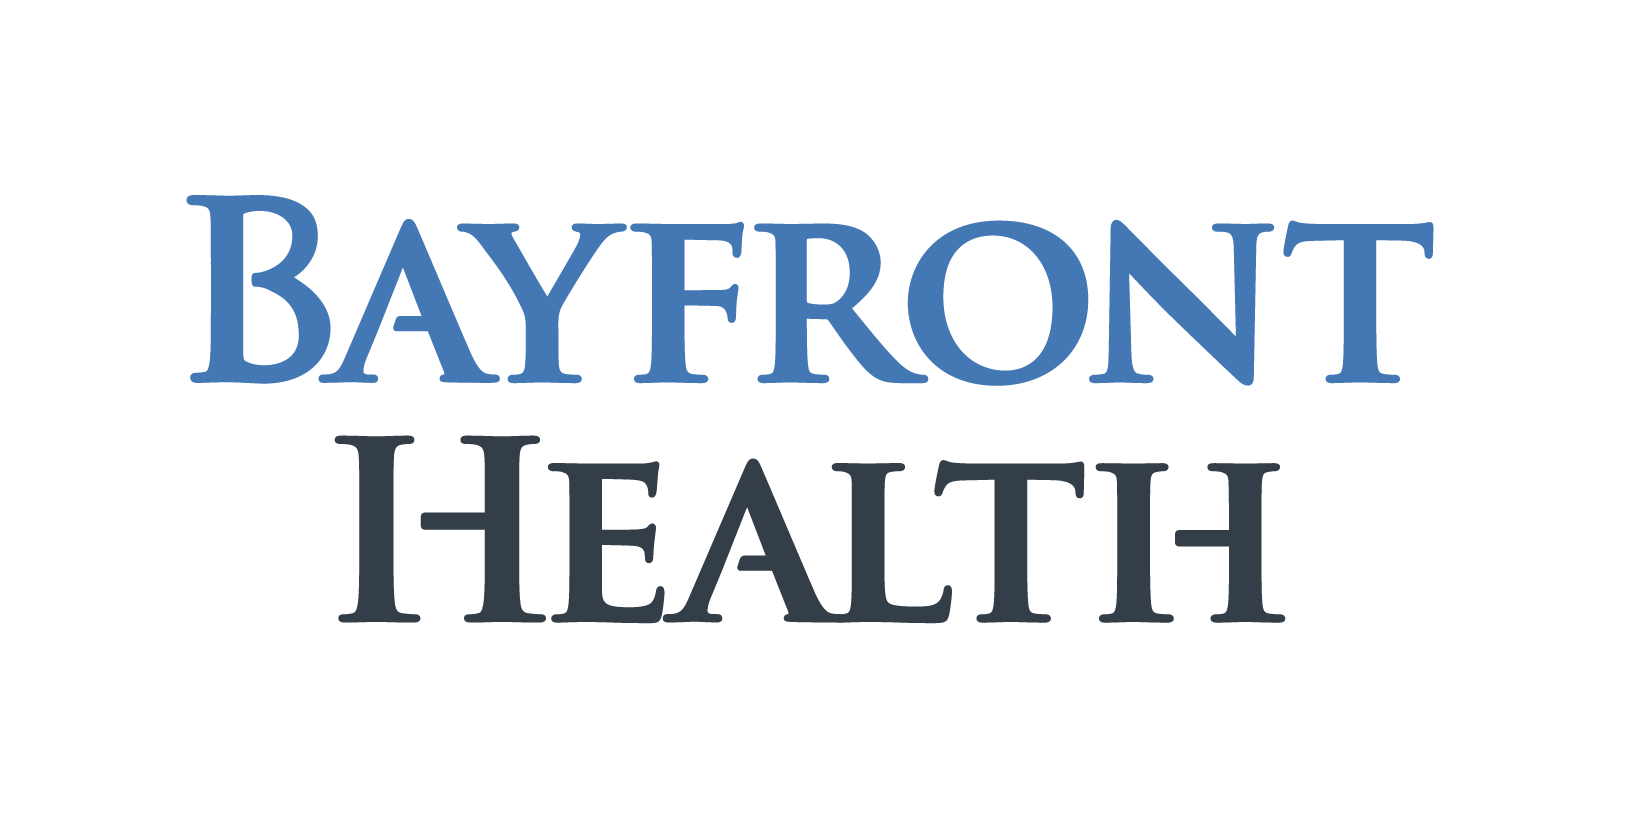 Bayfront Health